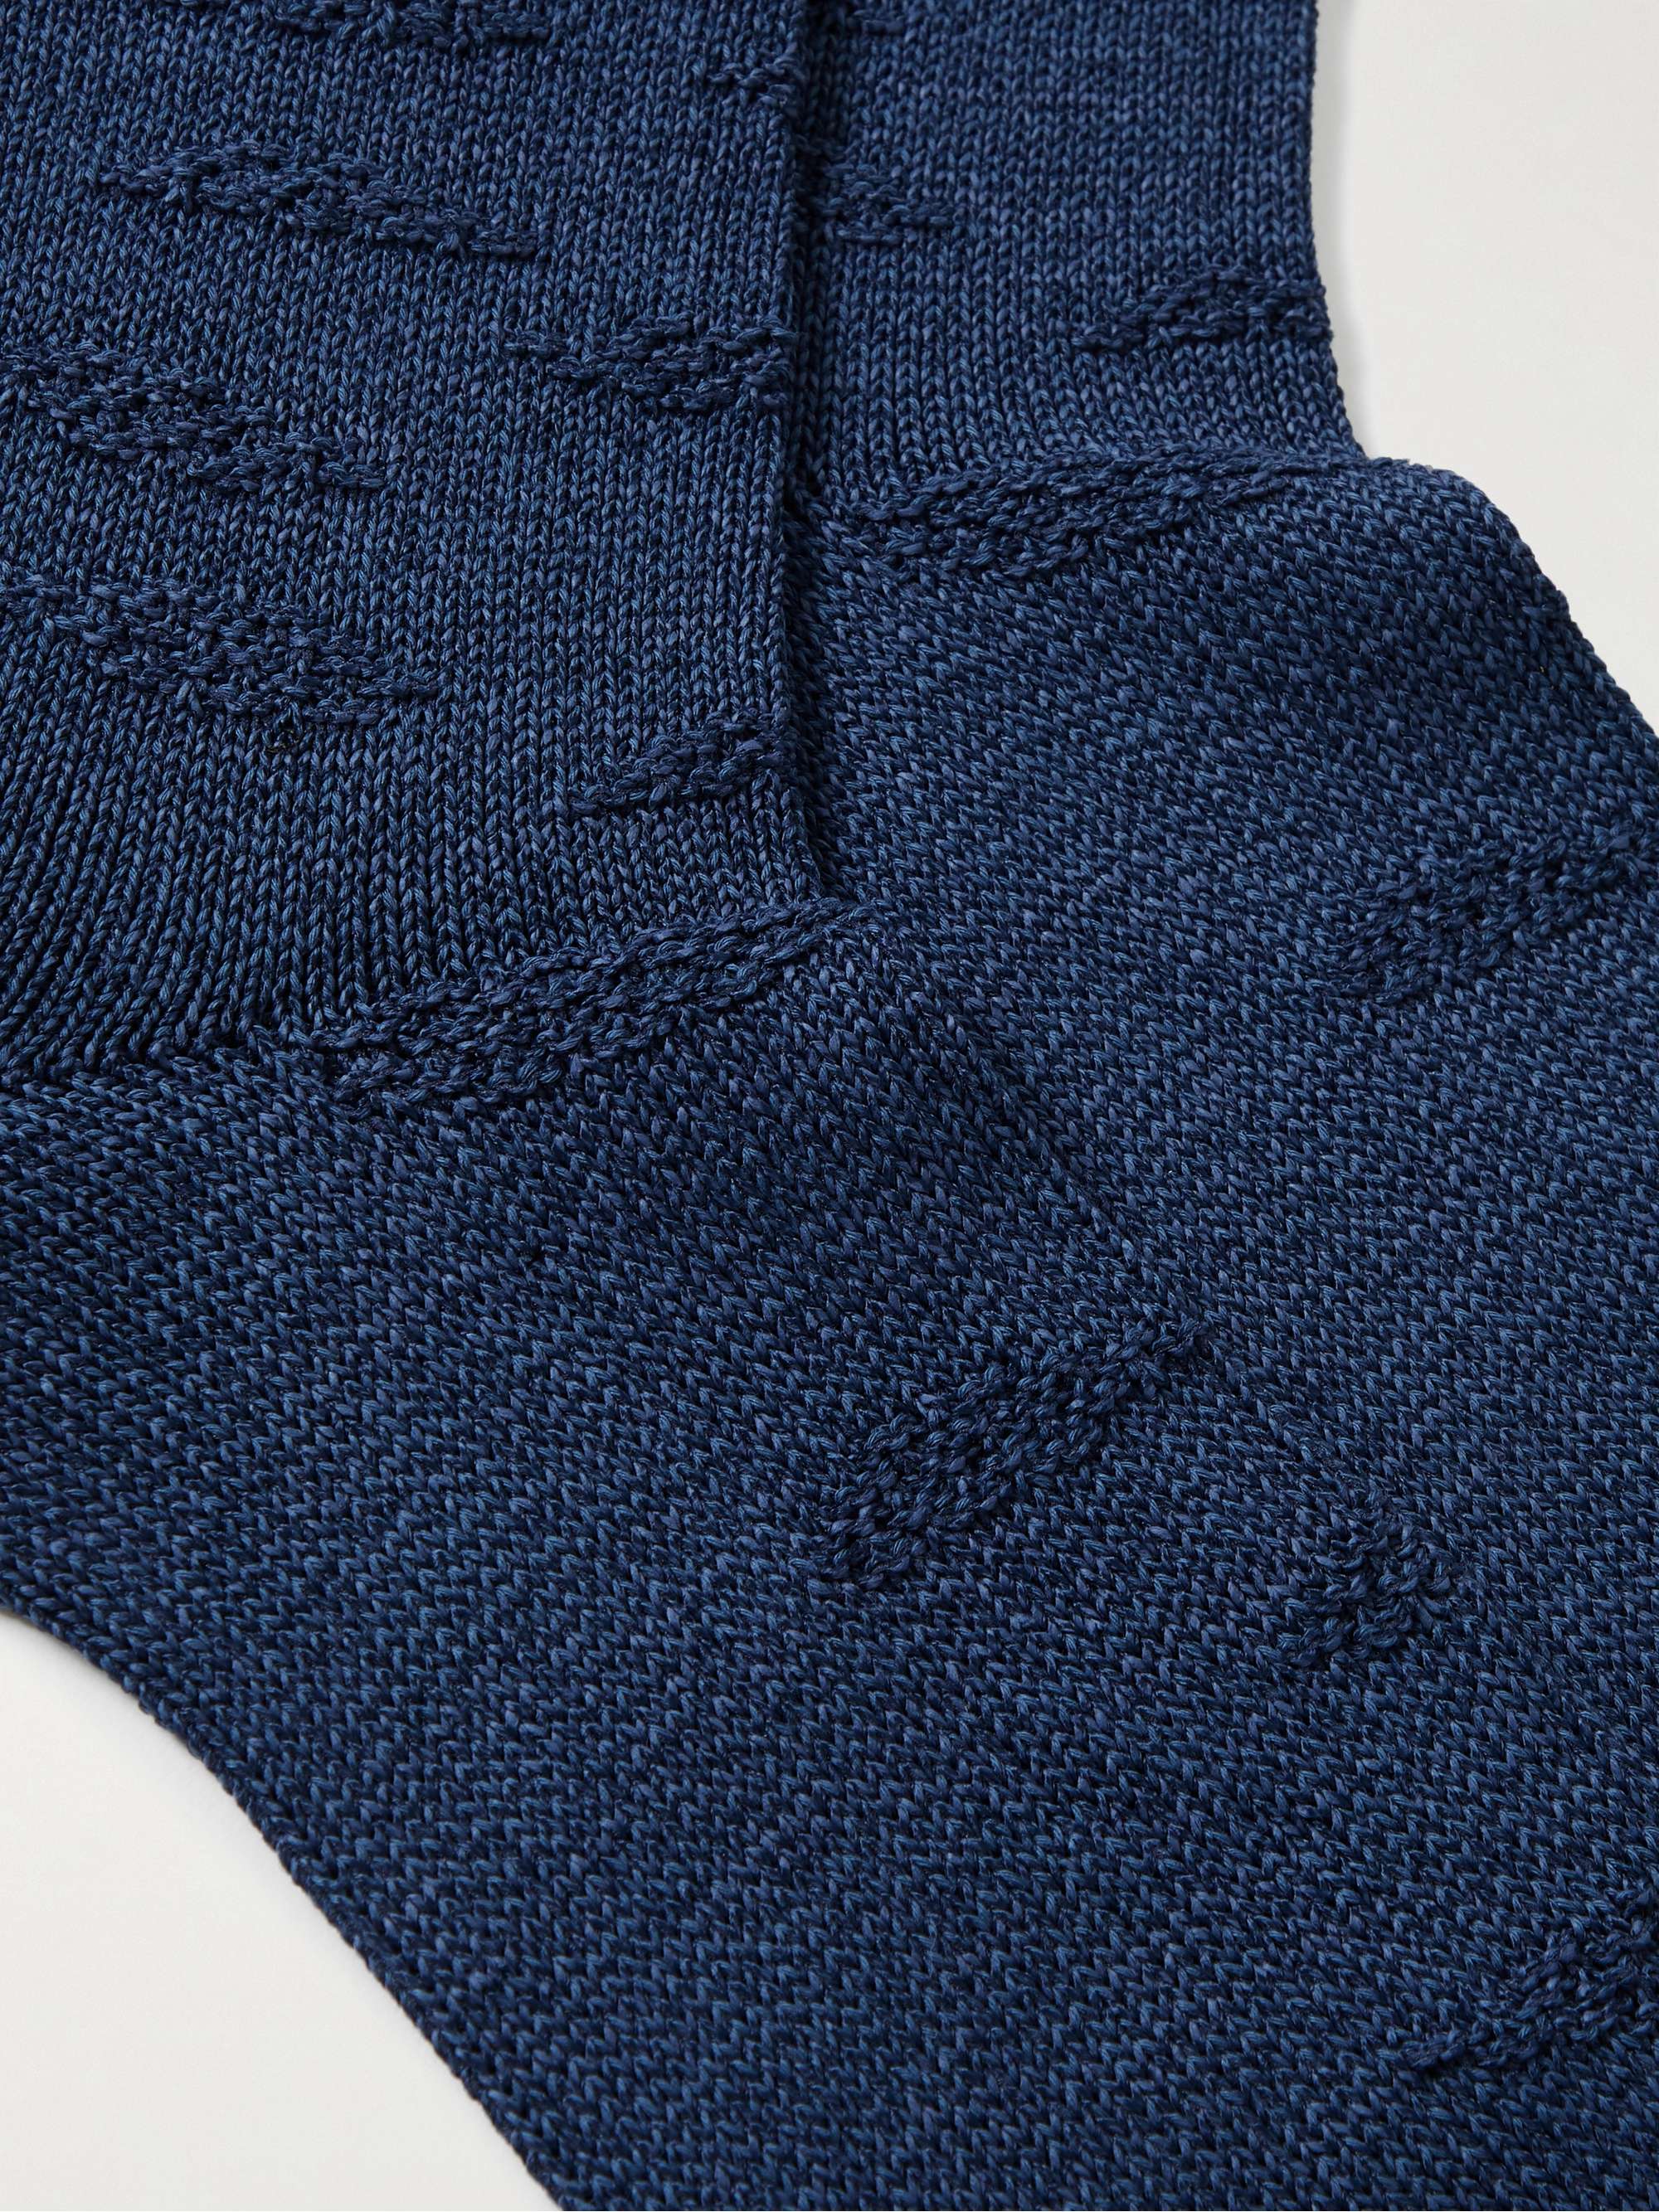 FALKE Textured-Knit Socks